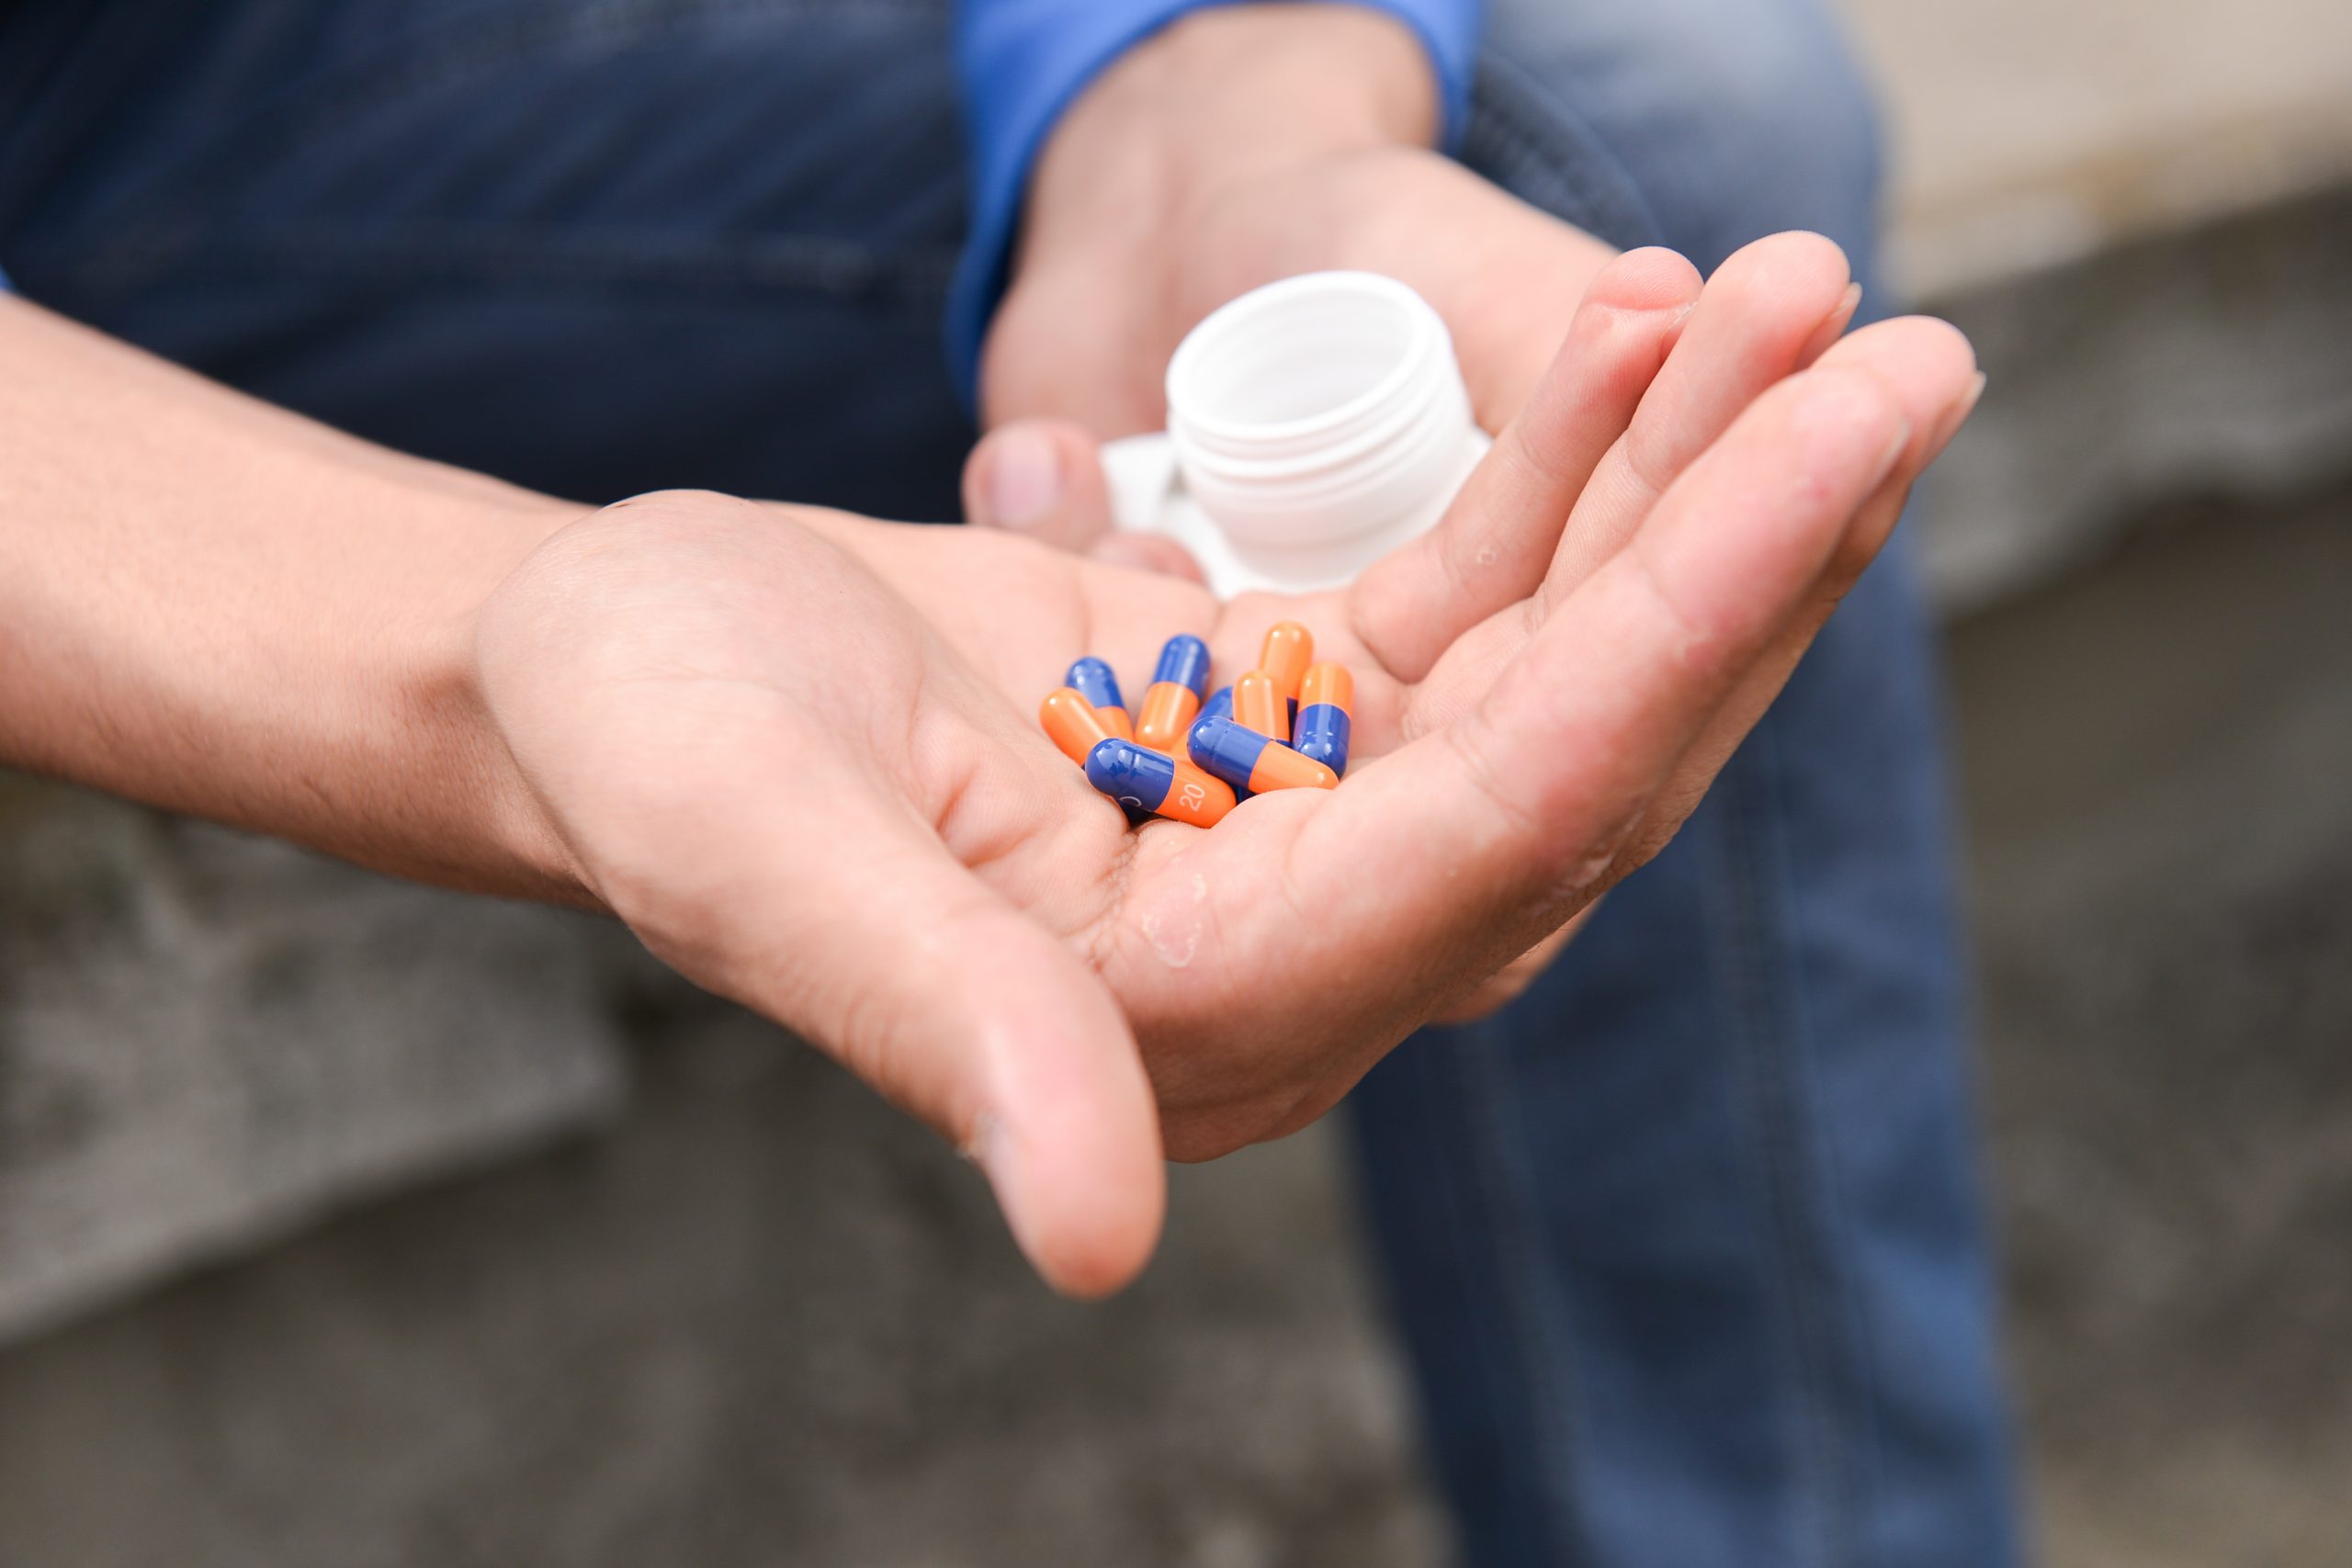 Prescription Drug Abuse in Teens